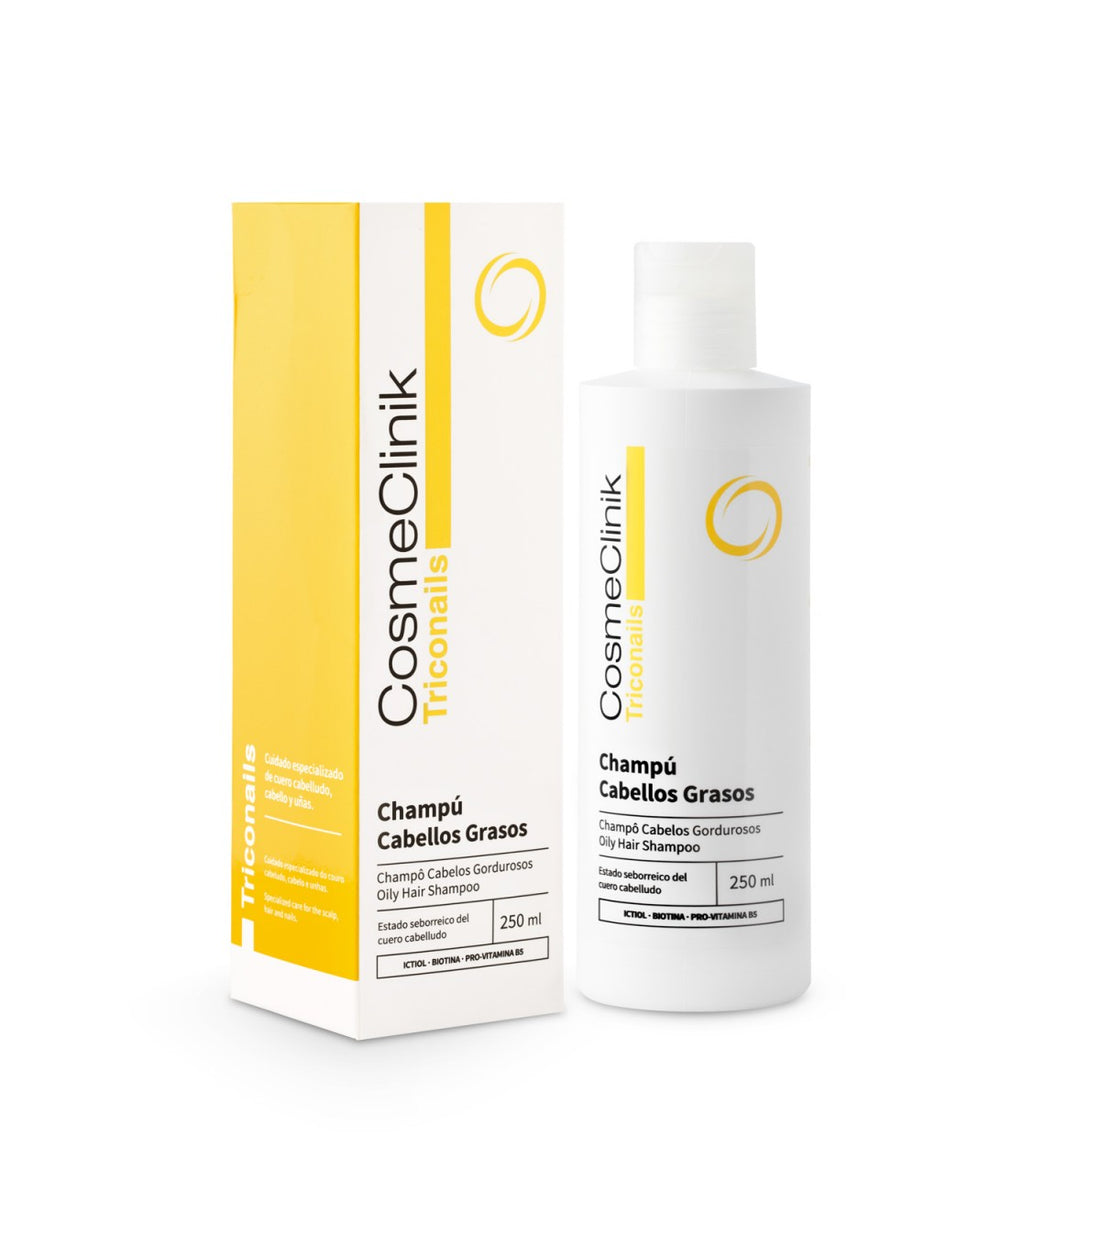 Triconails Shampoo for Oily Hair (250ml)